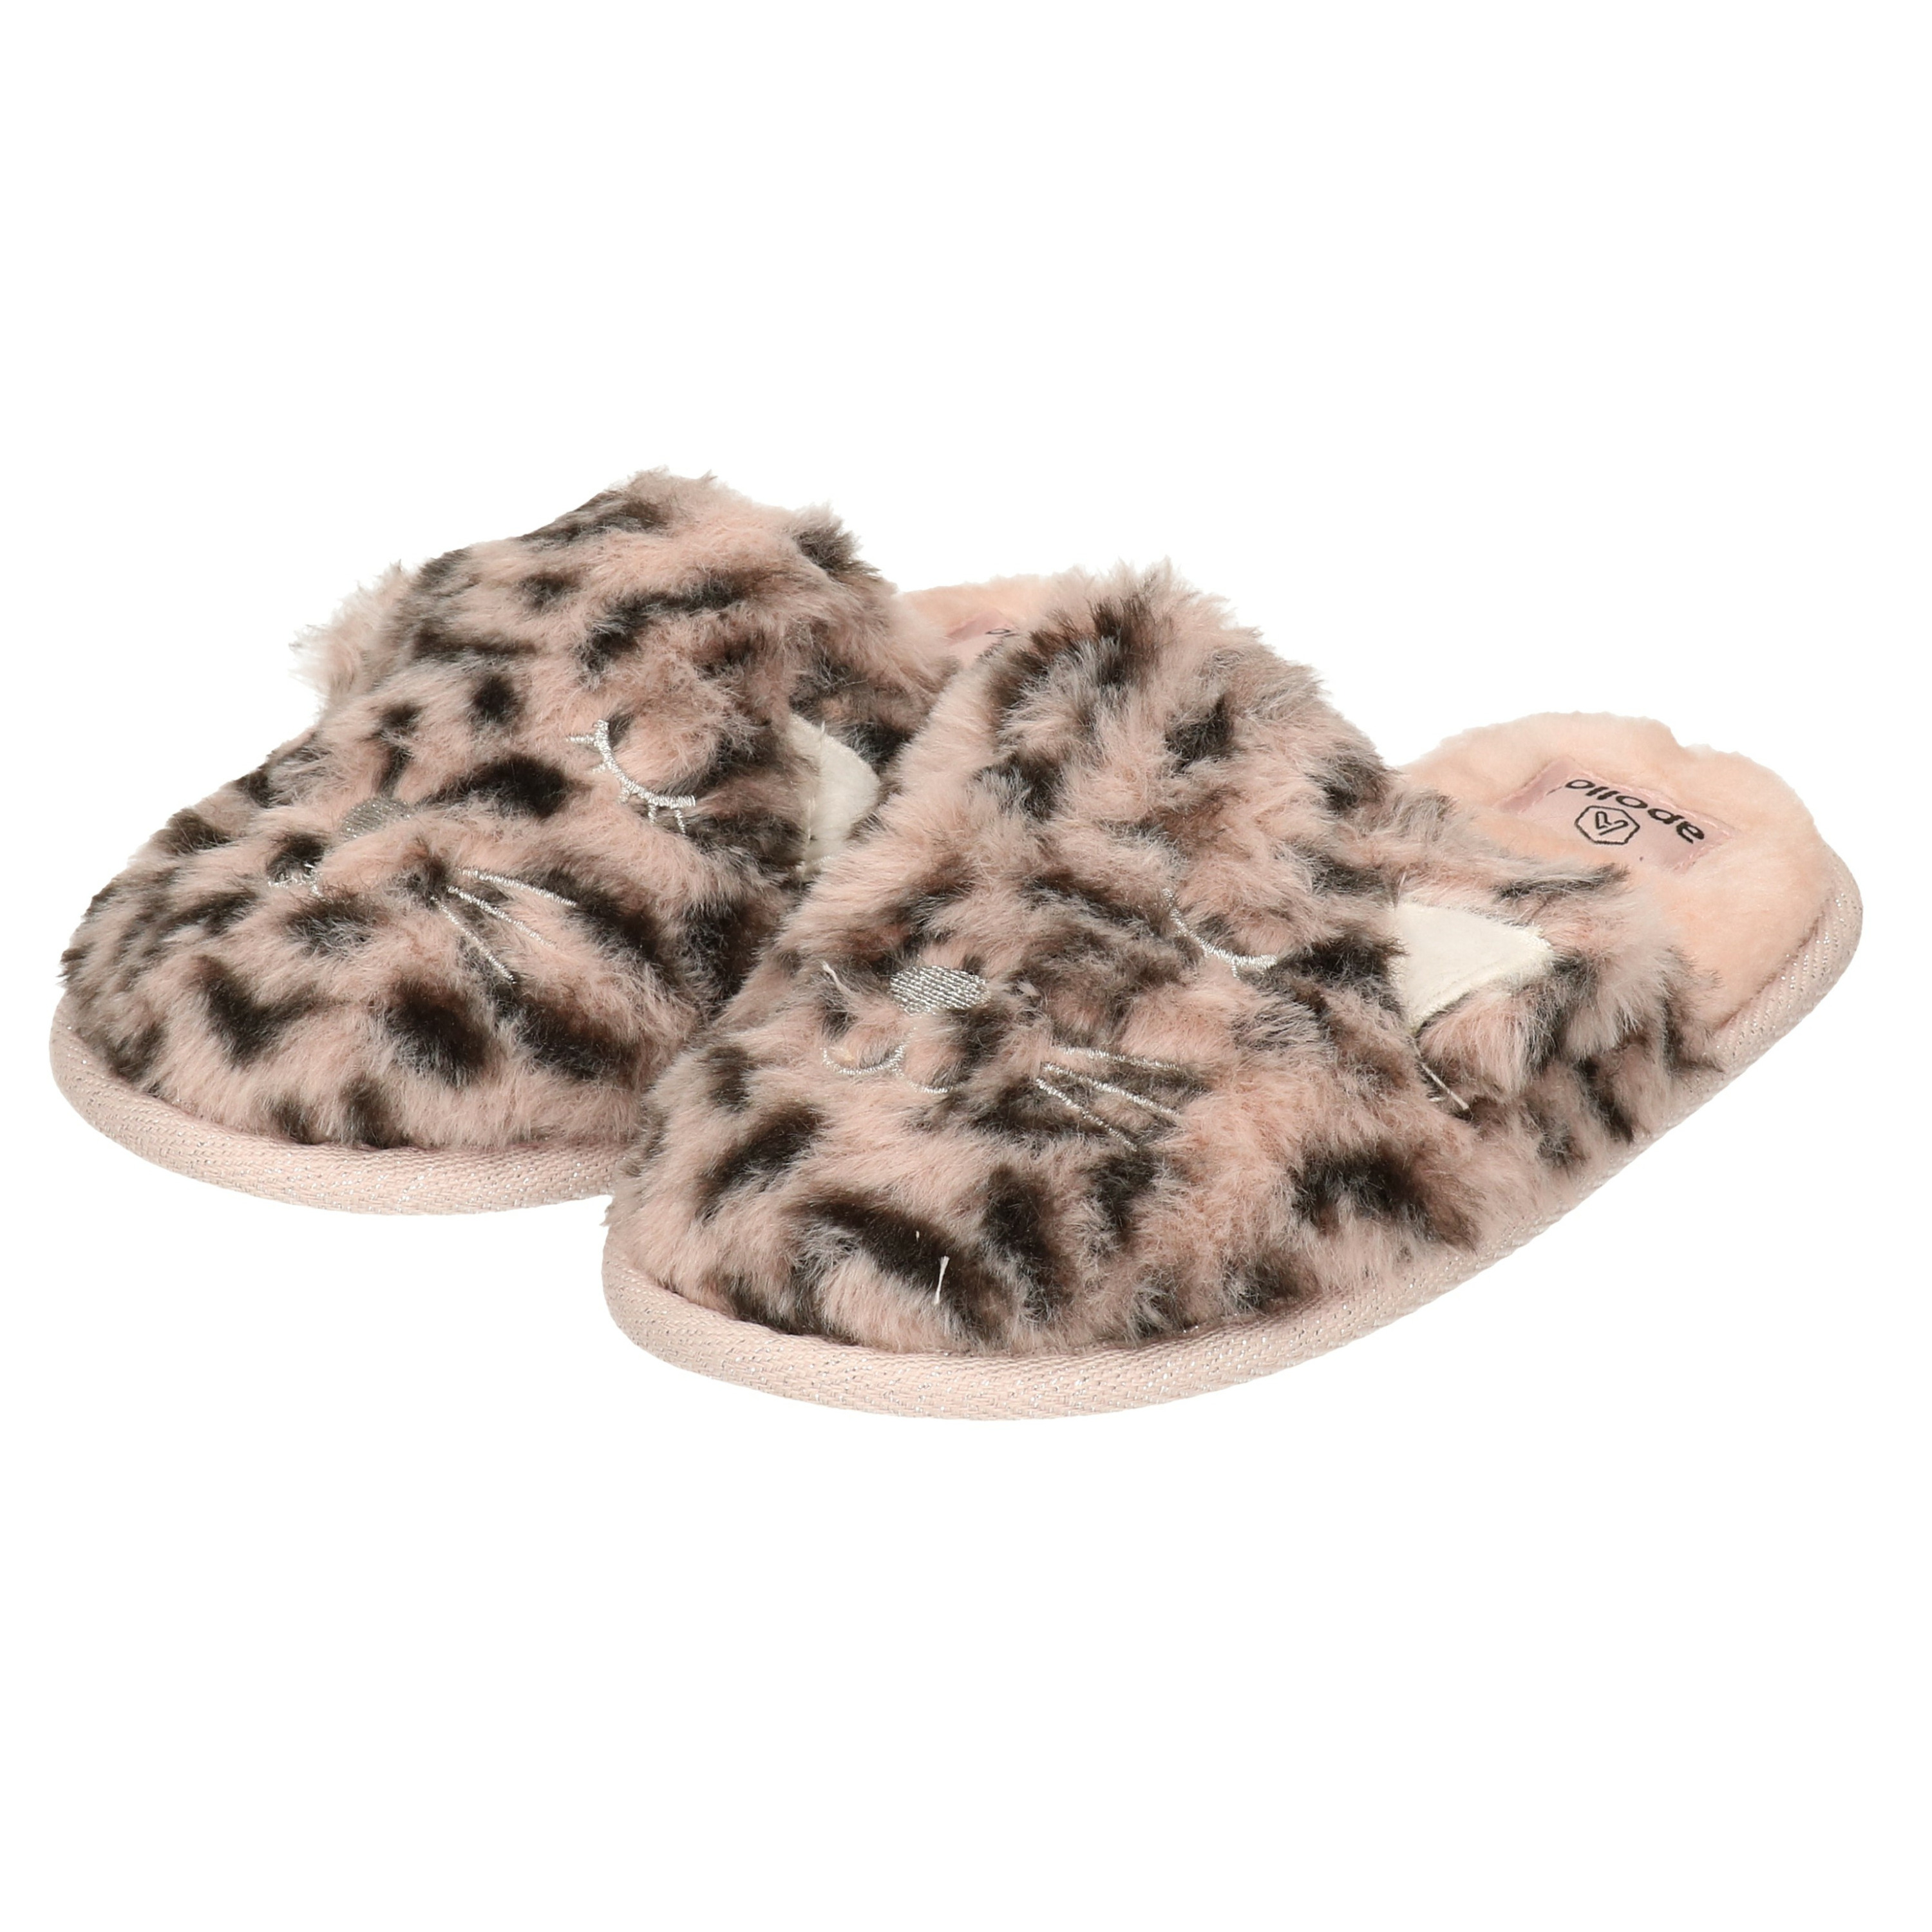 Meisjes instap slippers-pantoffels luipaard print roze maat 31-32